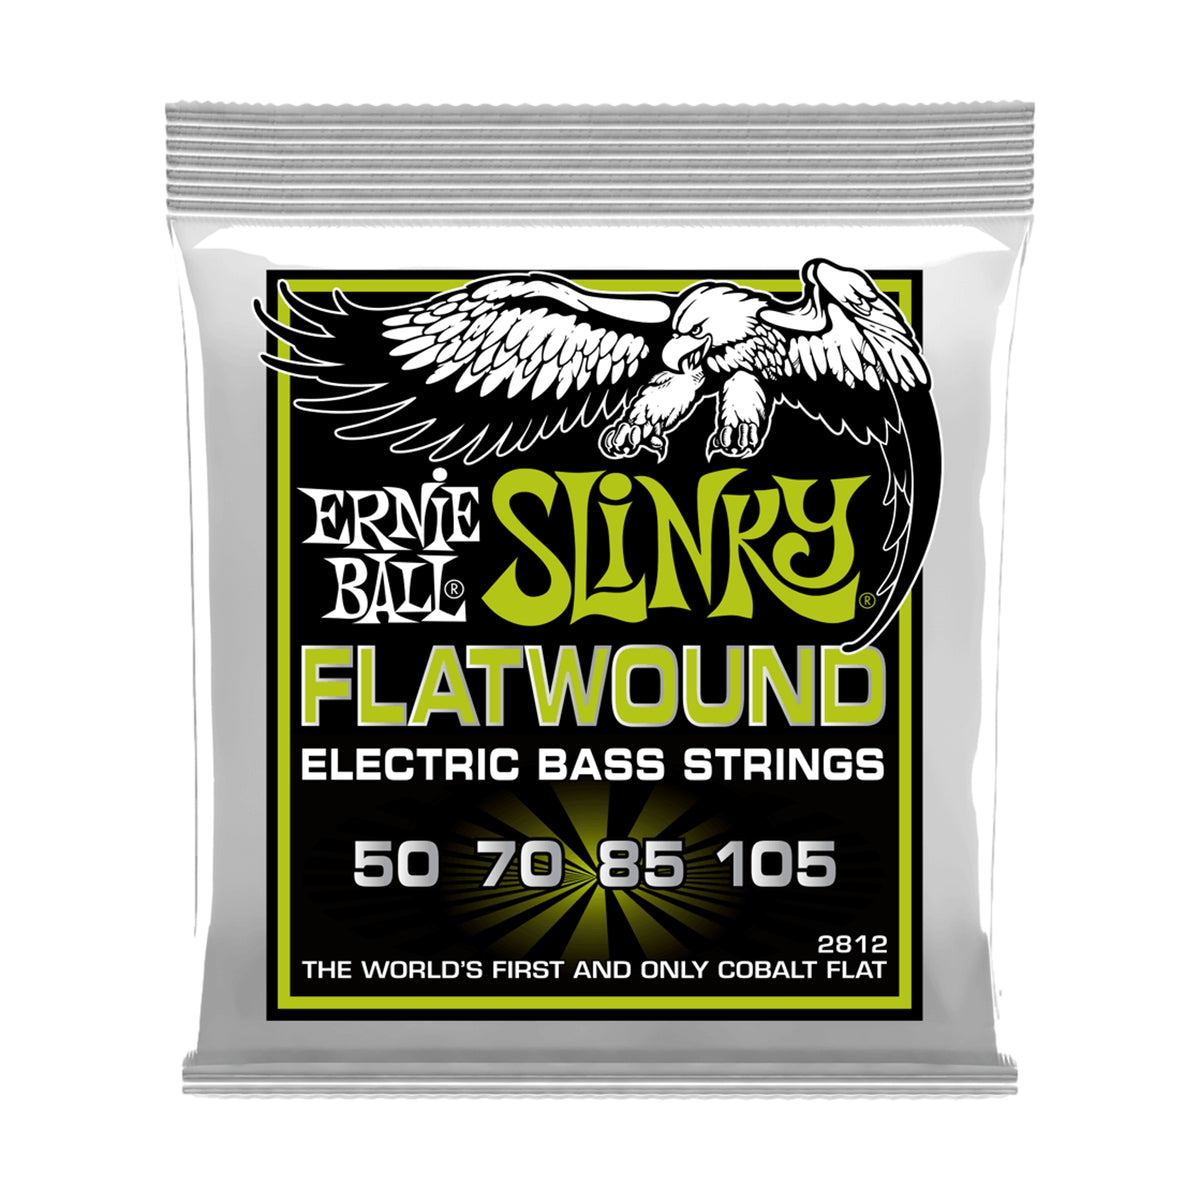 Ernie Ball Regular Slinky Flatwound Electric Bass Strings 50-105